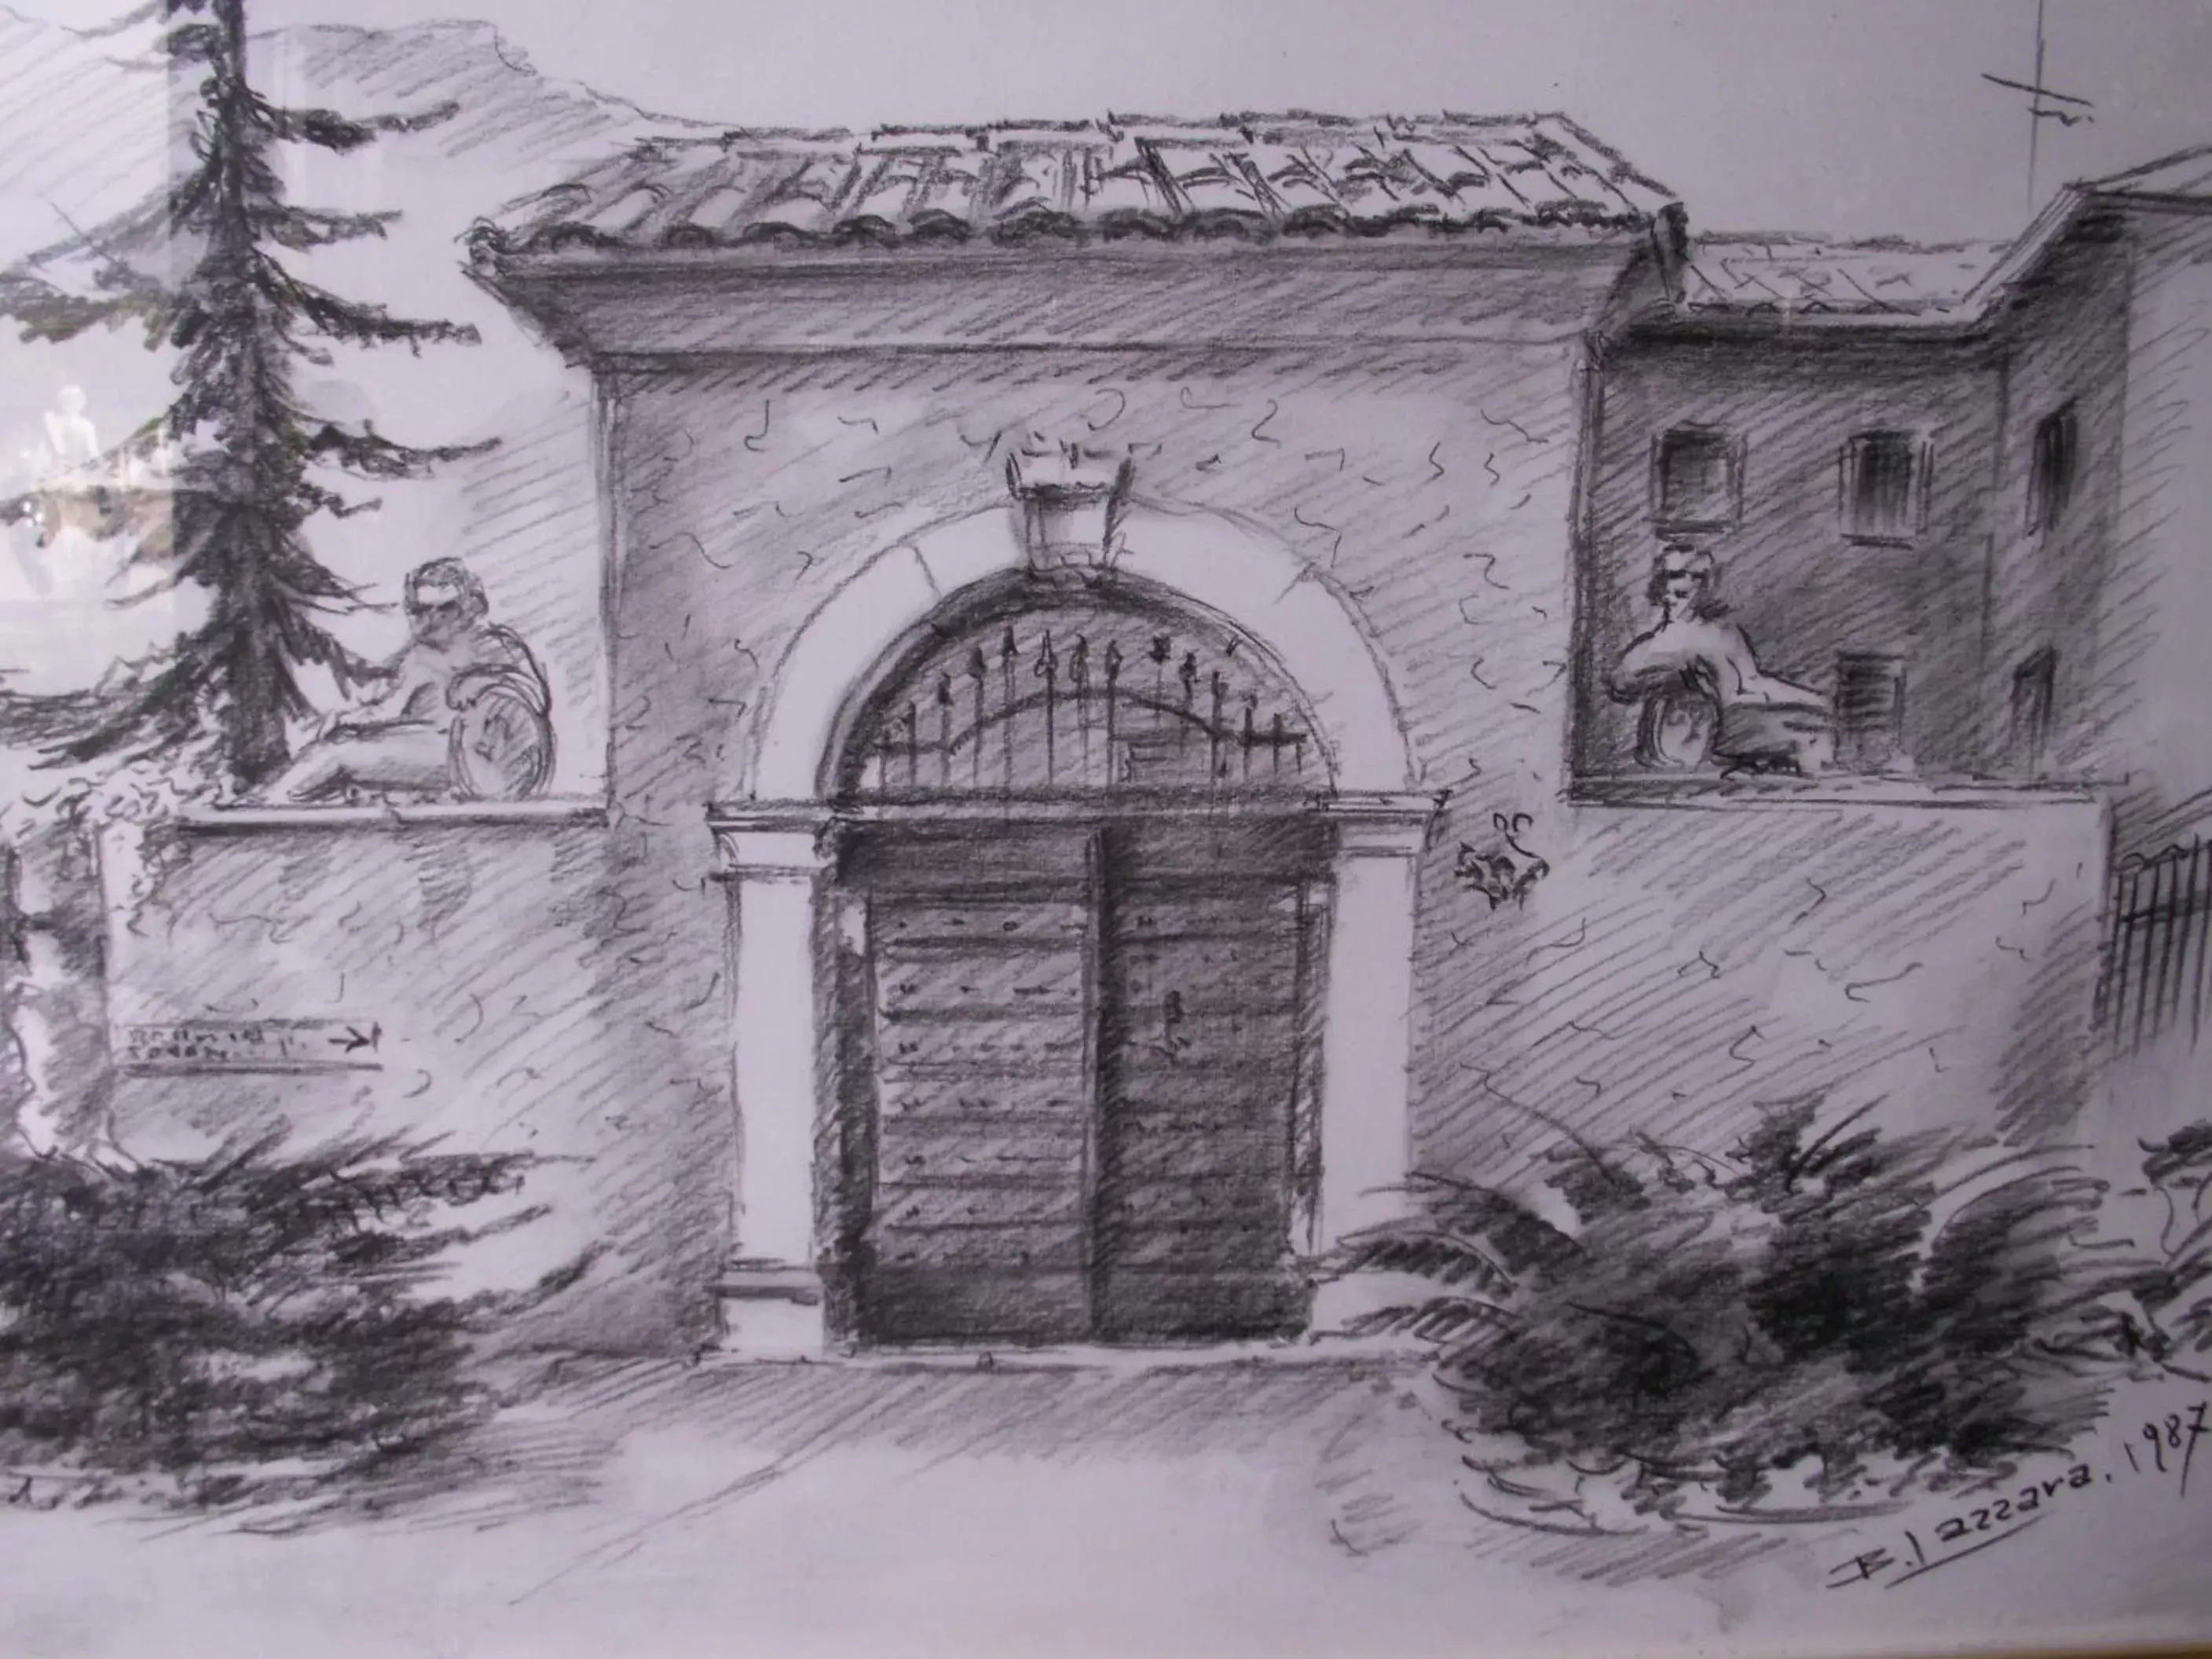 Decorative detail, Winter in Residence Segattini